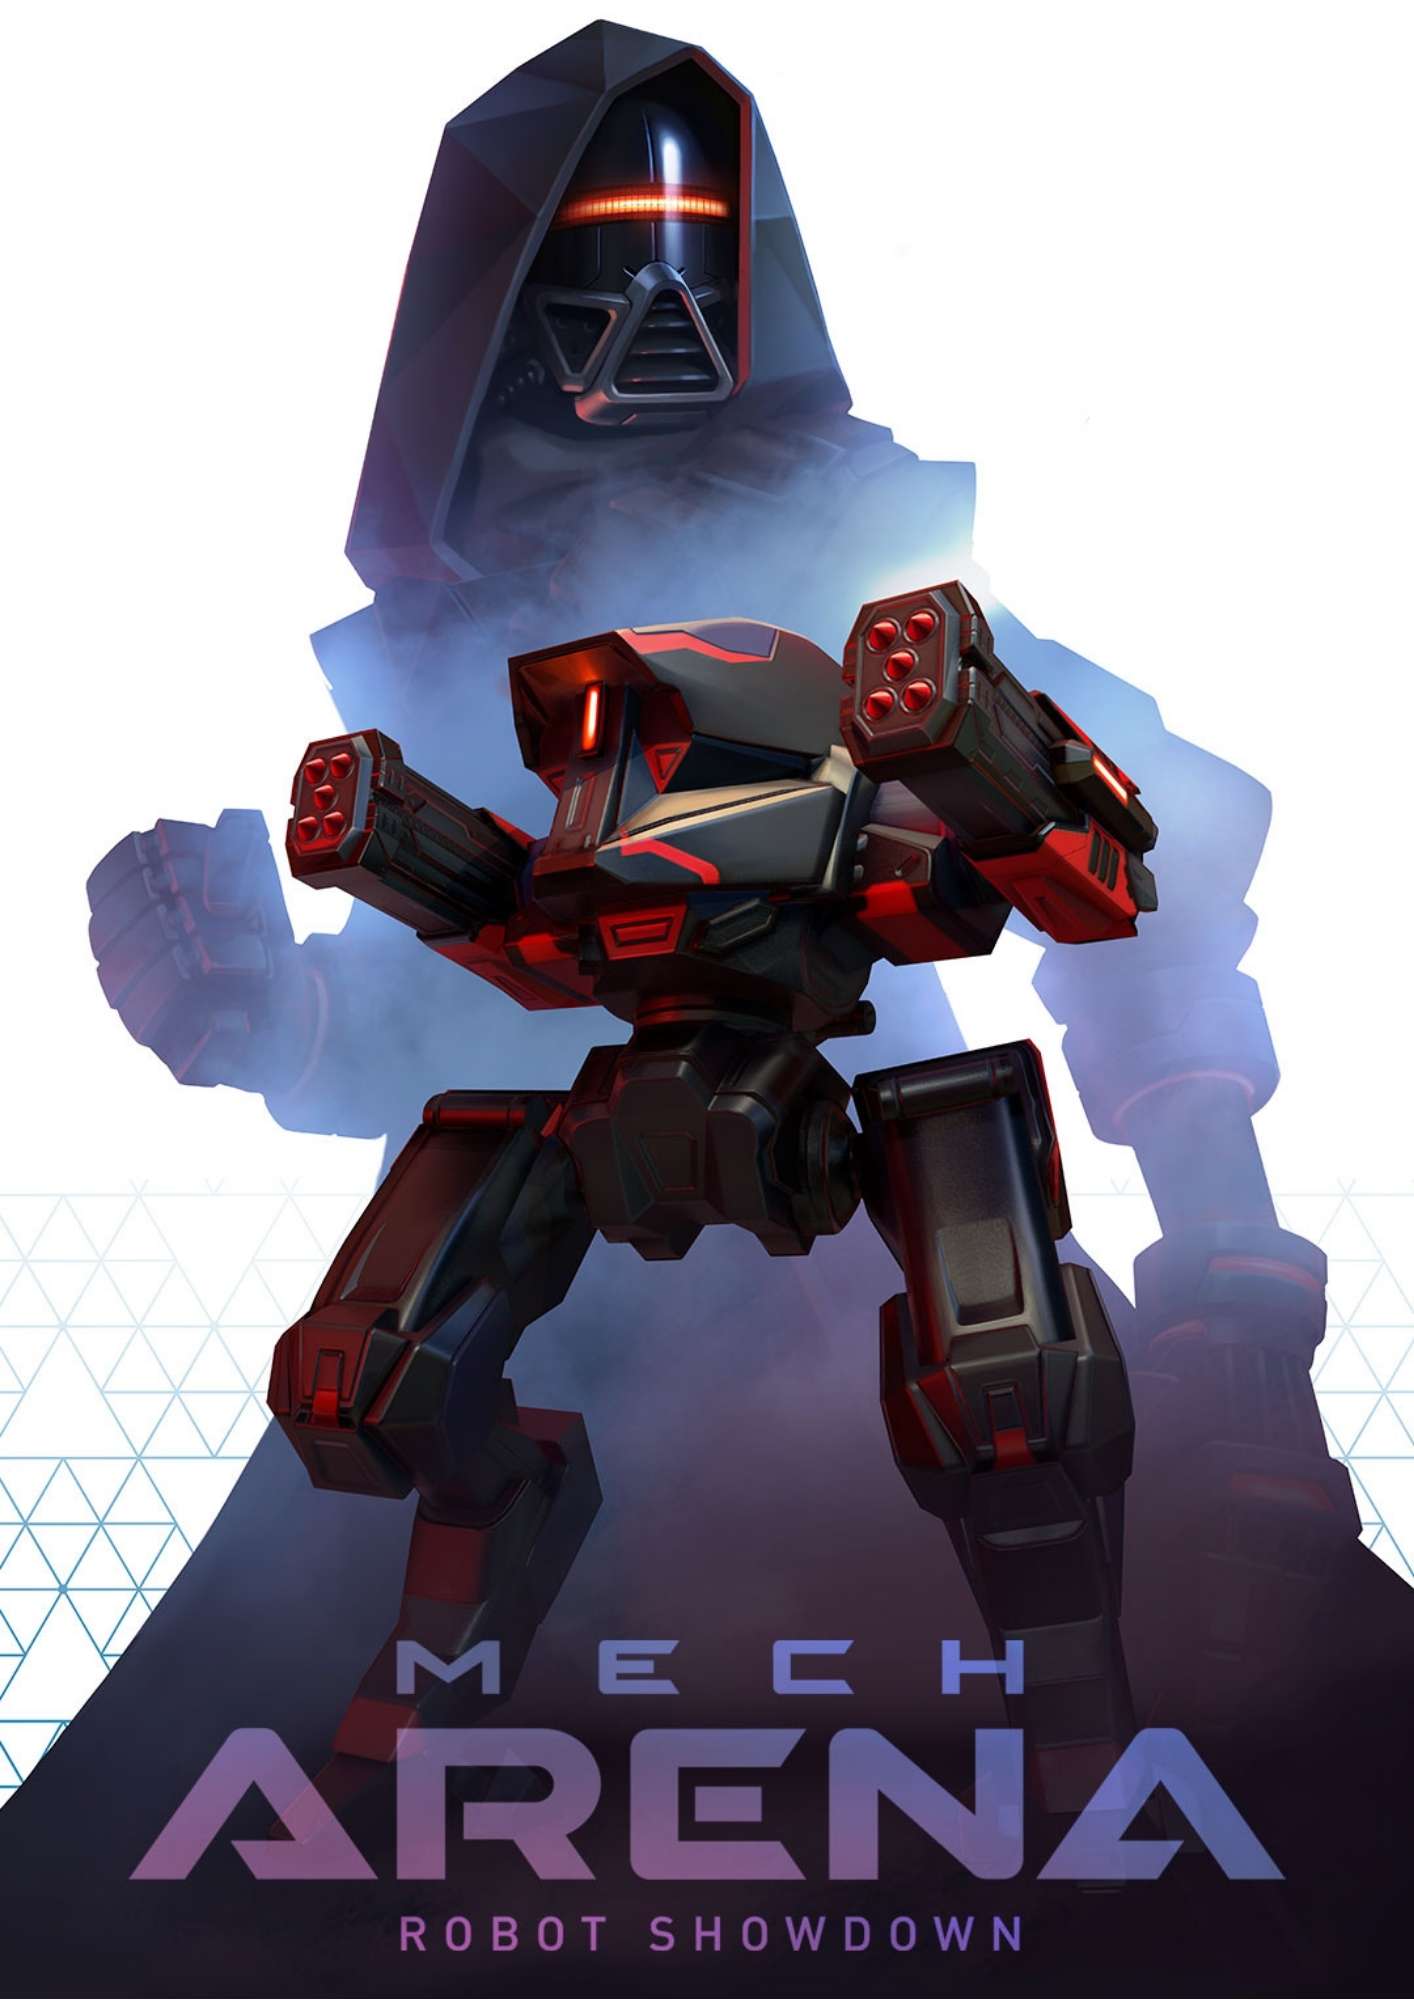 Jogo Mech Arena: Robot Showndown traz lutas de robôs para o Android e iOS 